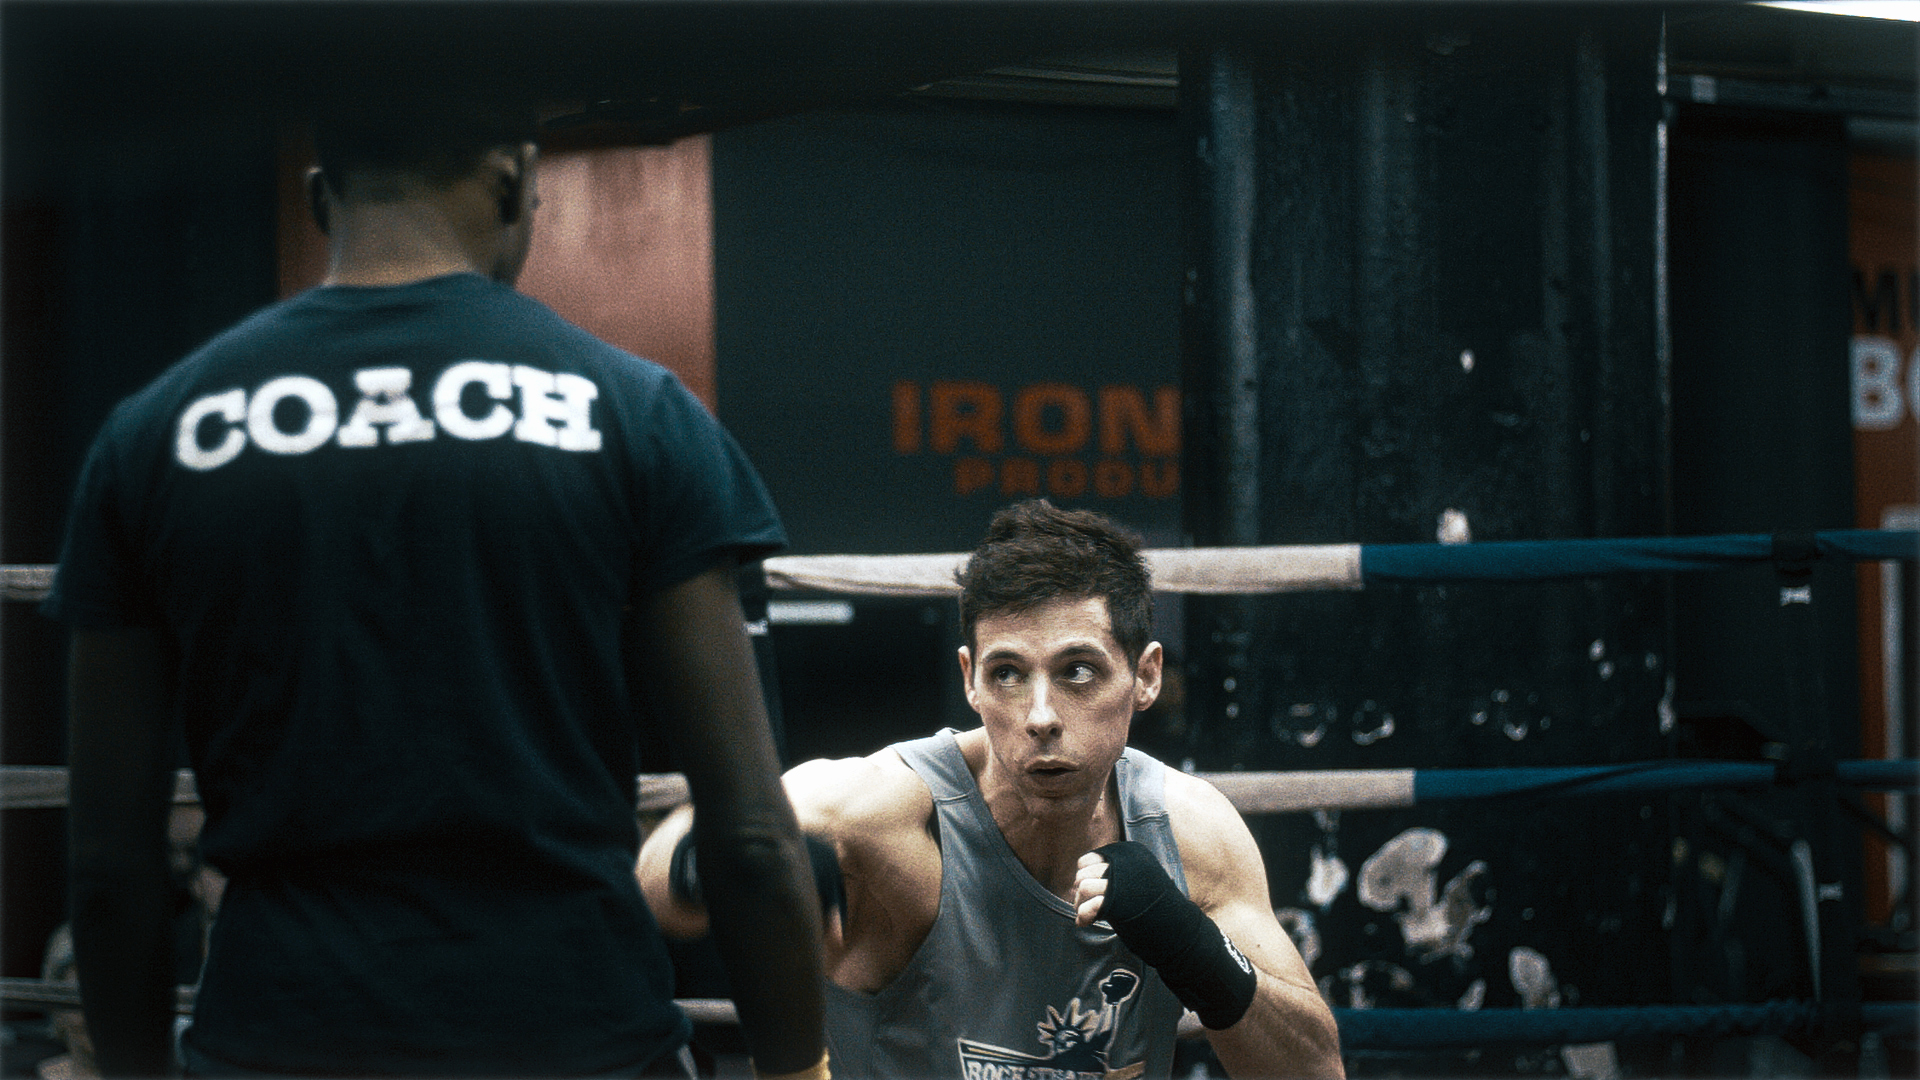 Alex Montaldo Boxing training @ Gleason's Gym